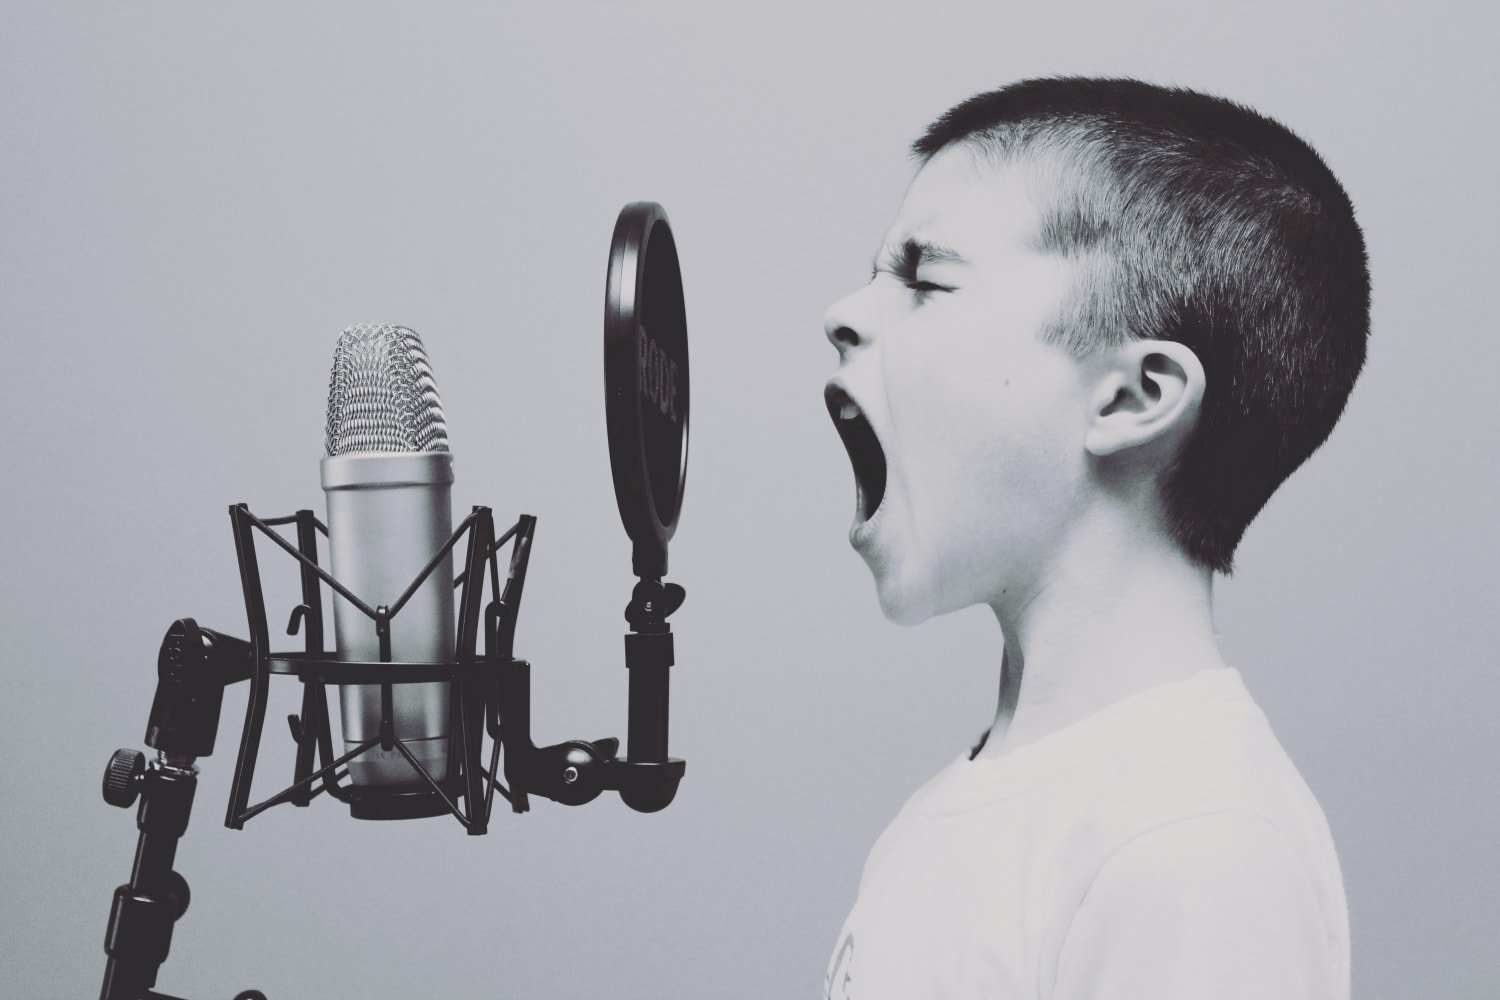 Young Boy Joyfully Shouting Into Studio Microphone